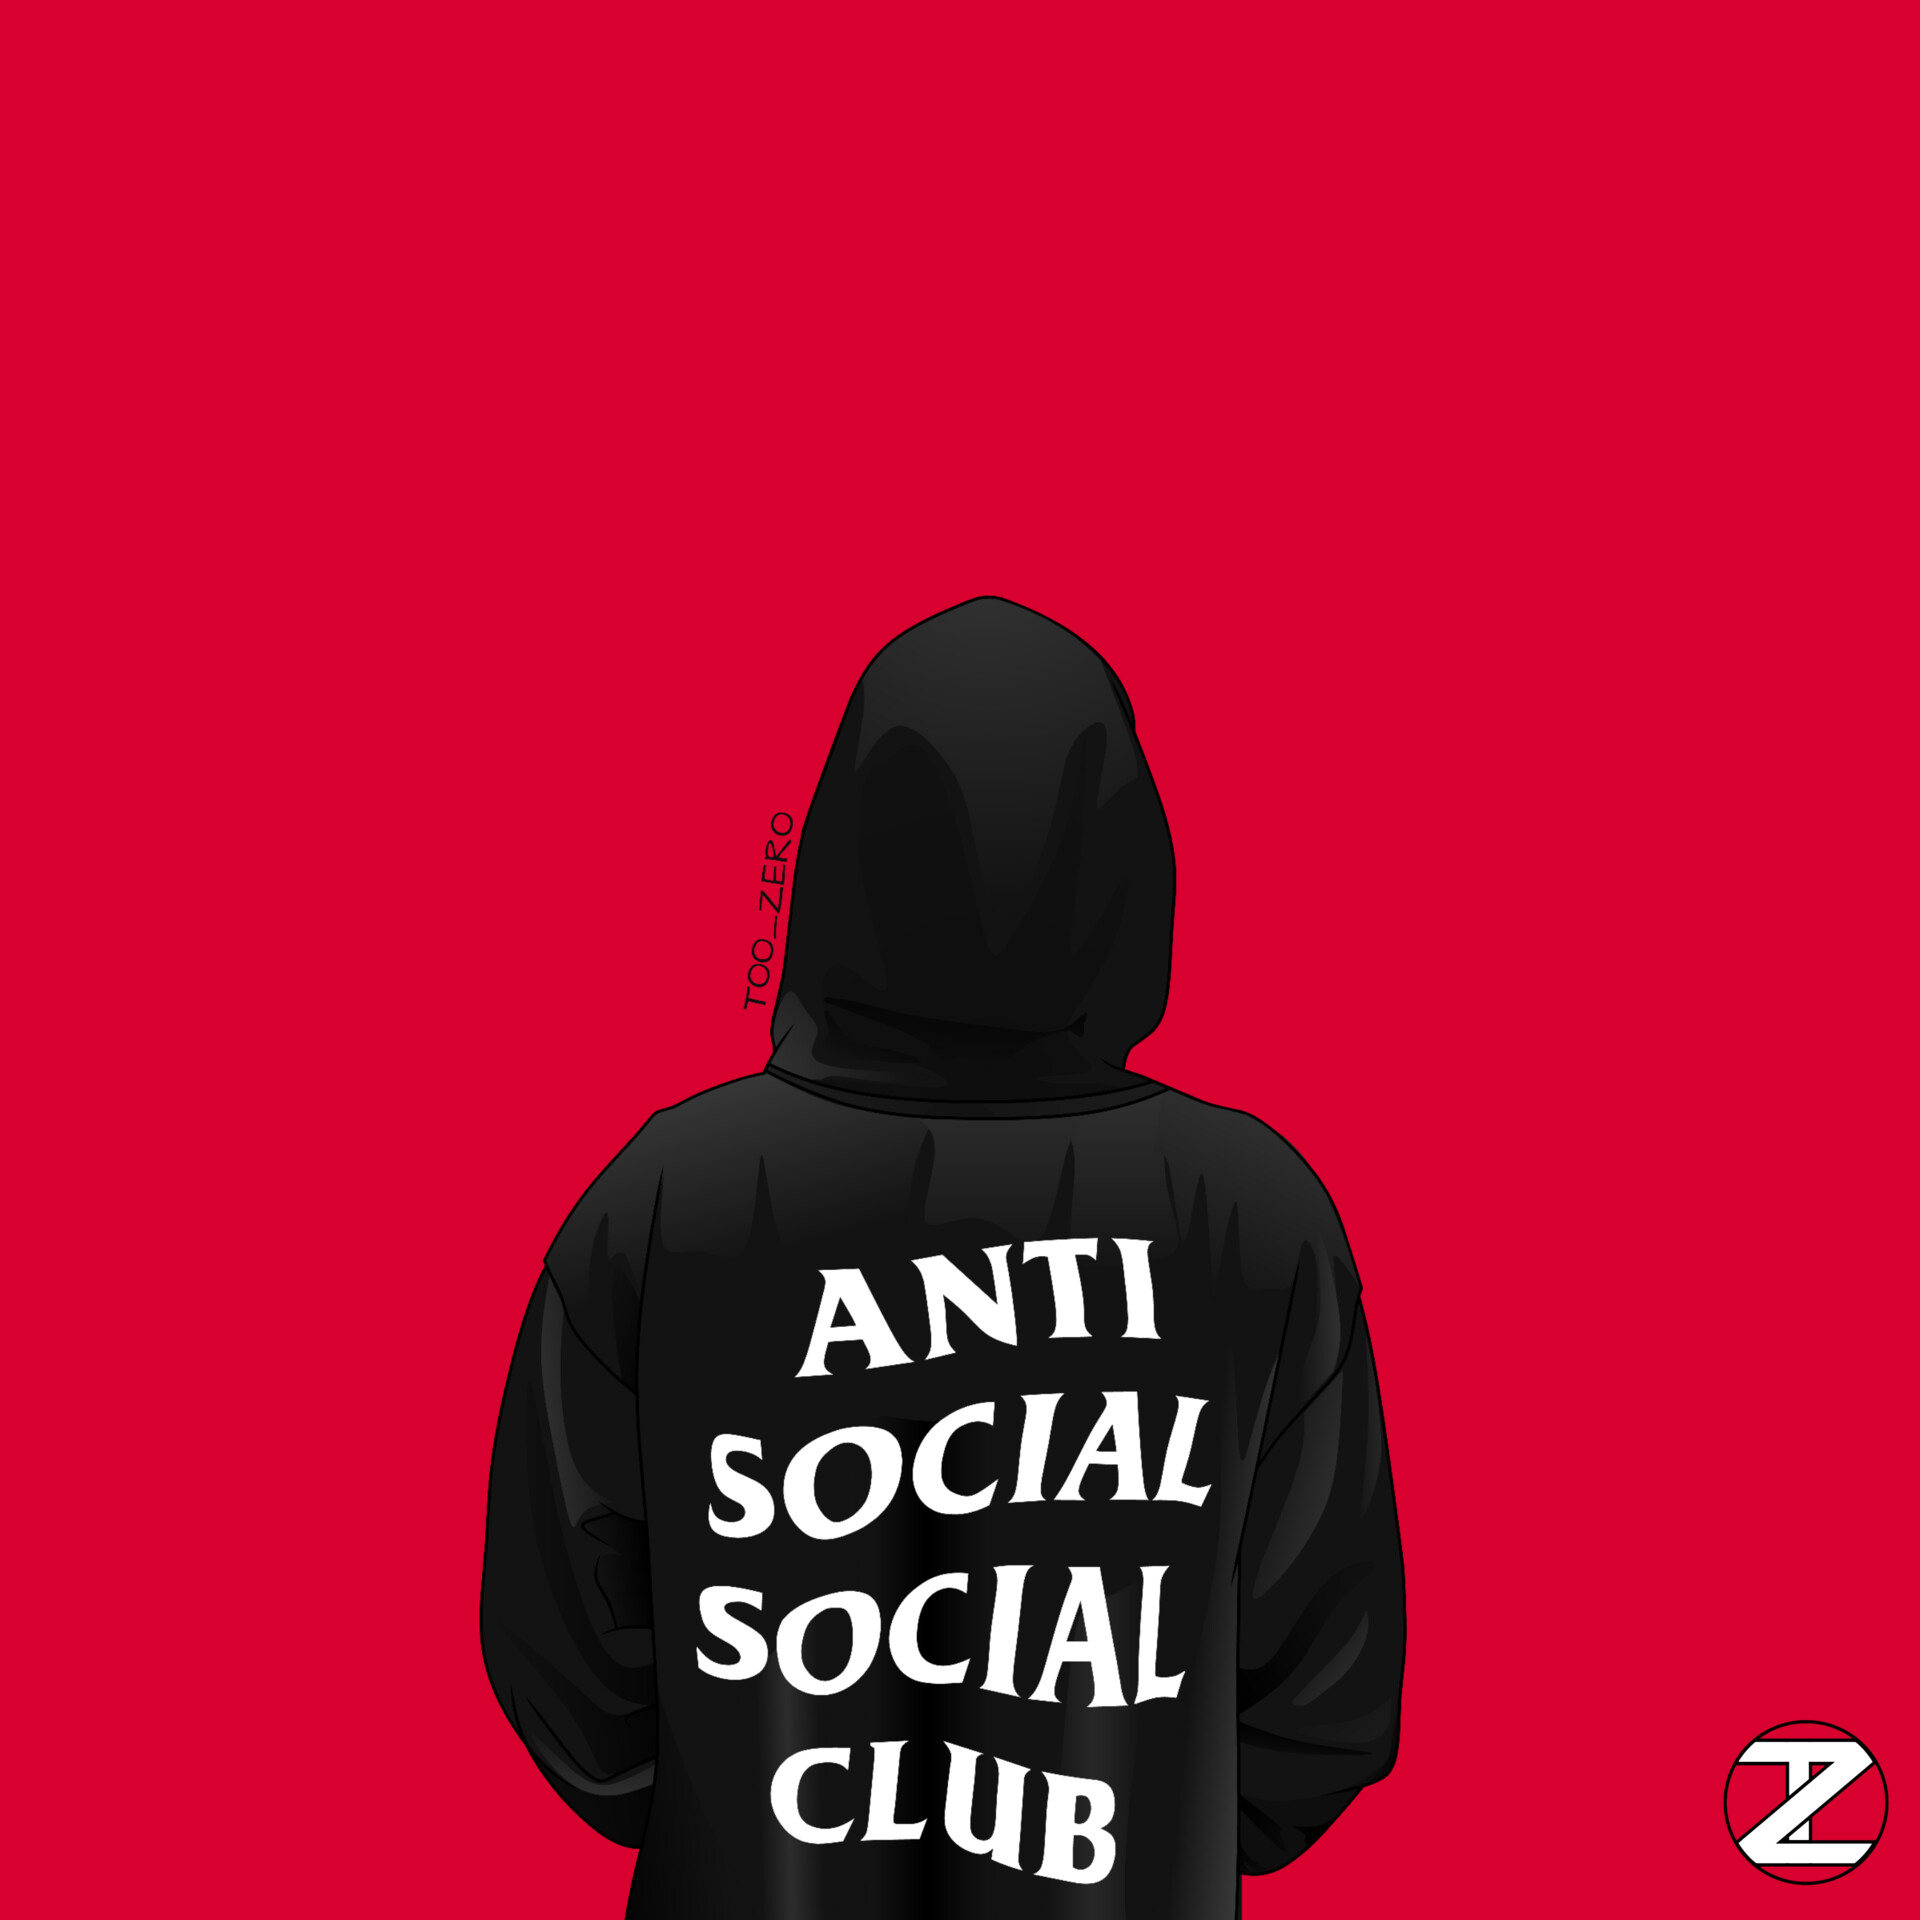 ArtStation - Anti Social Social Club ArtWork